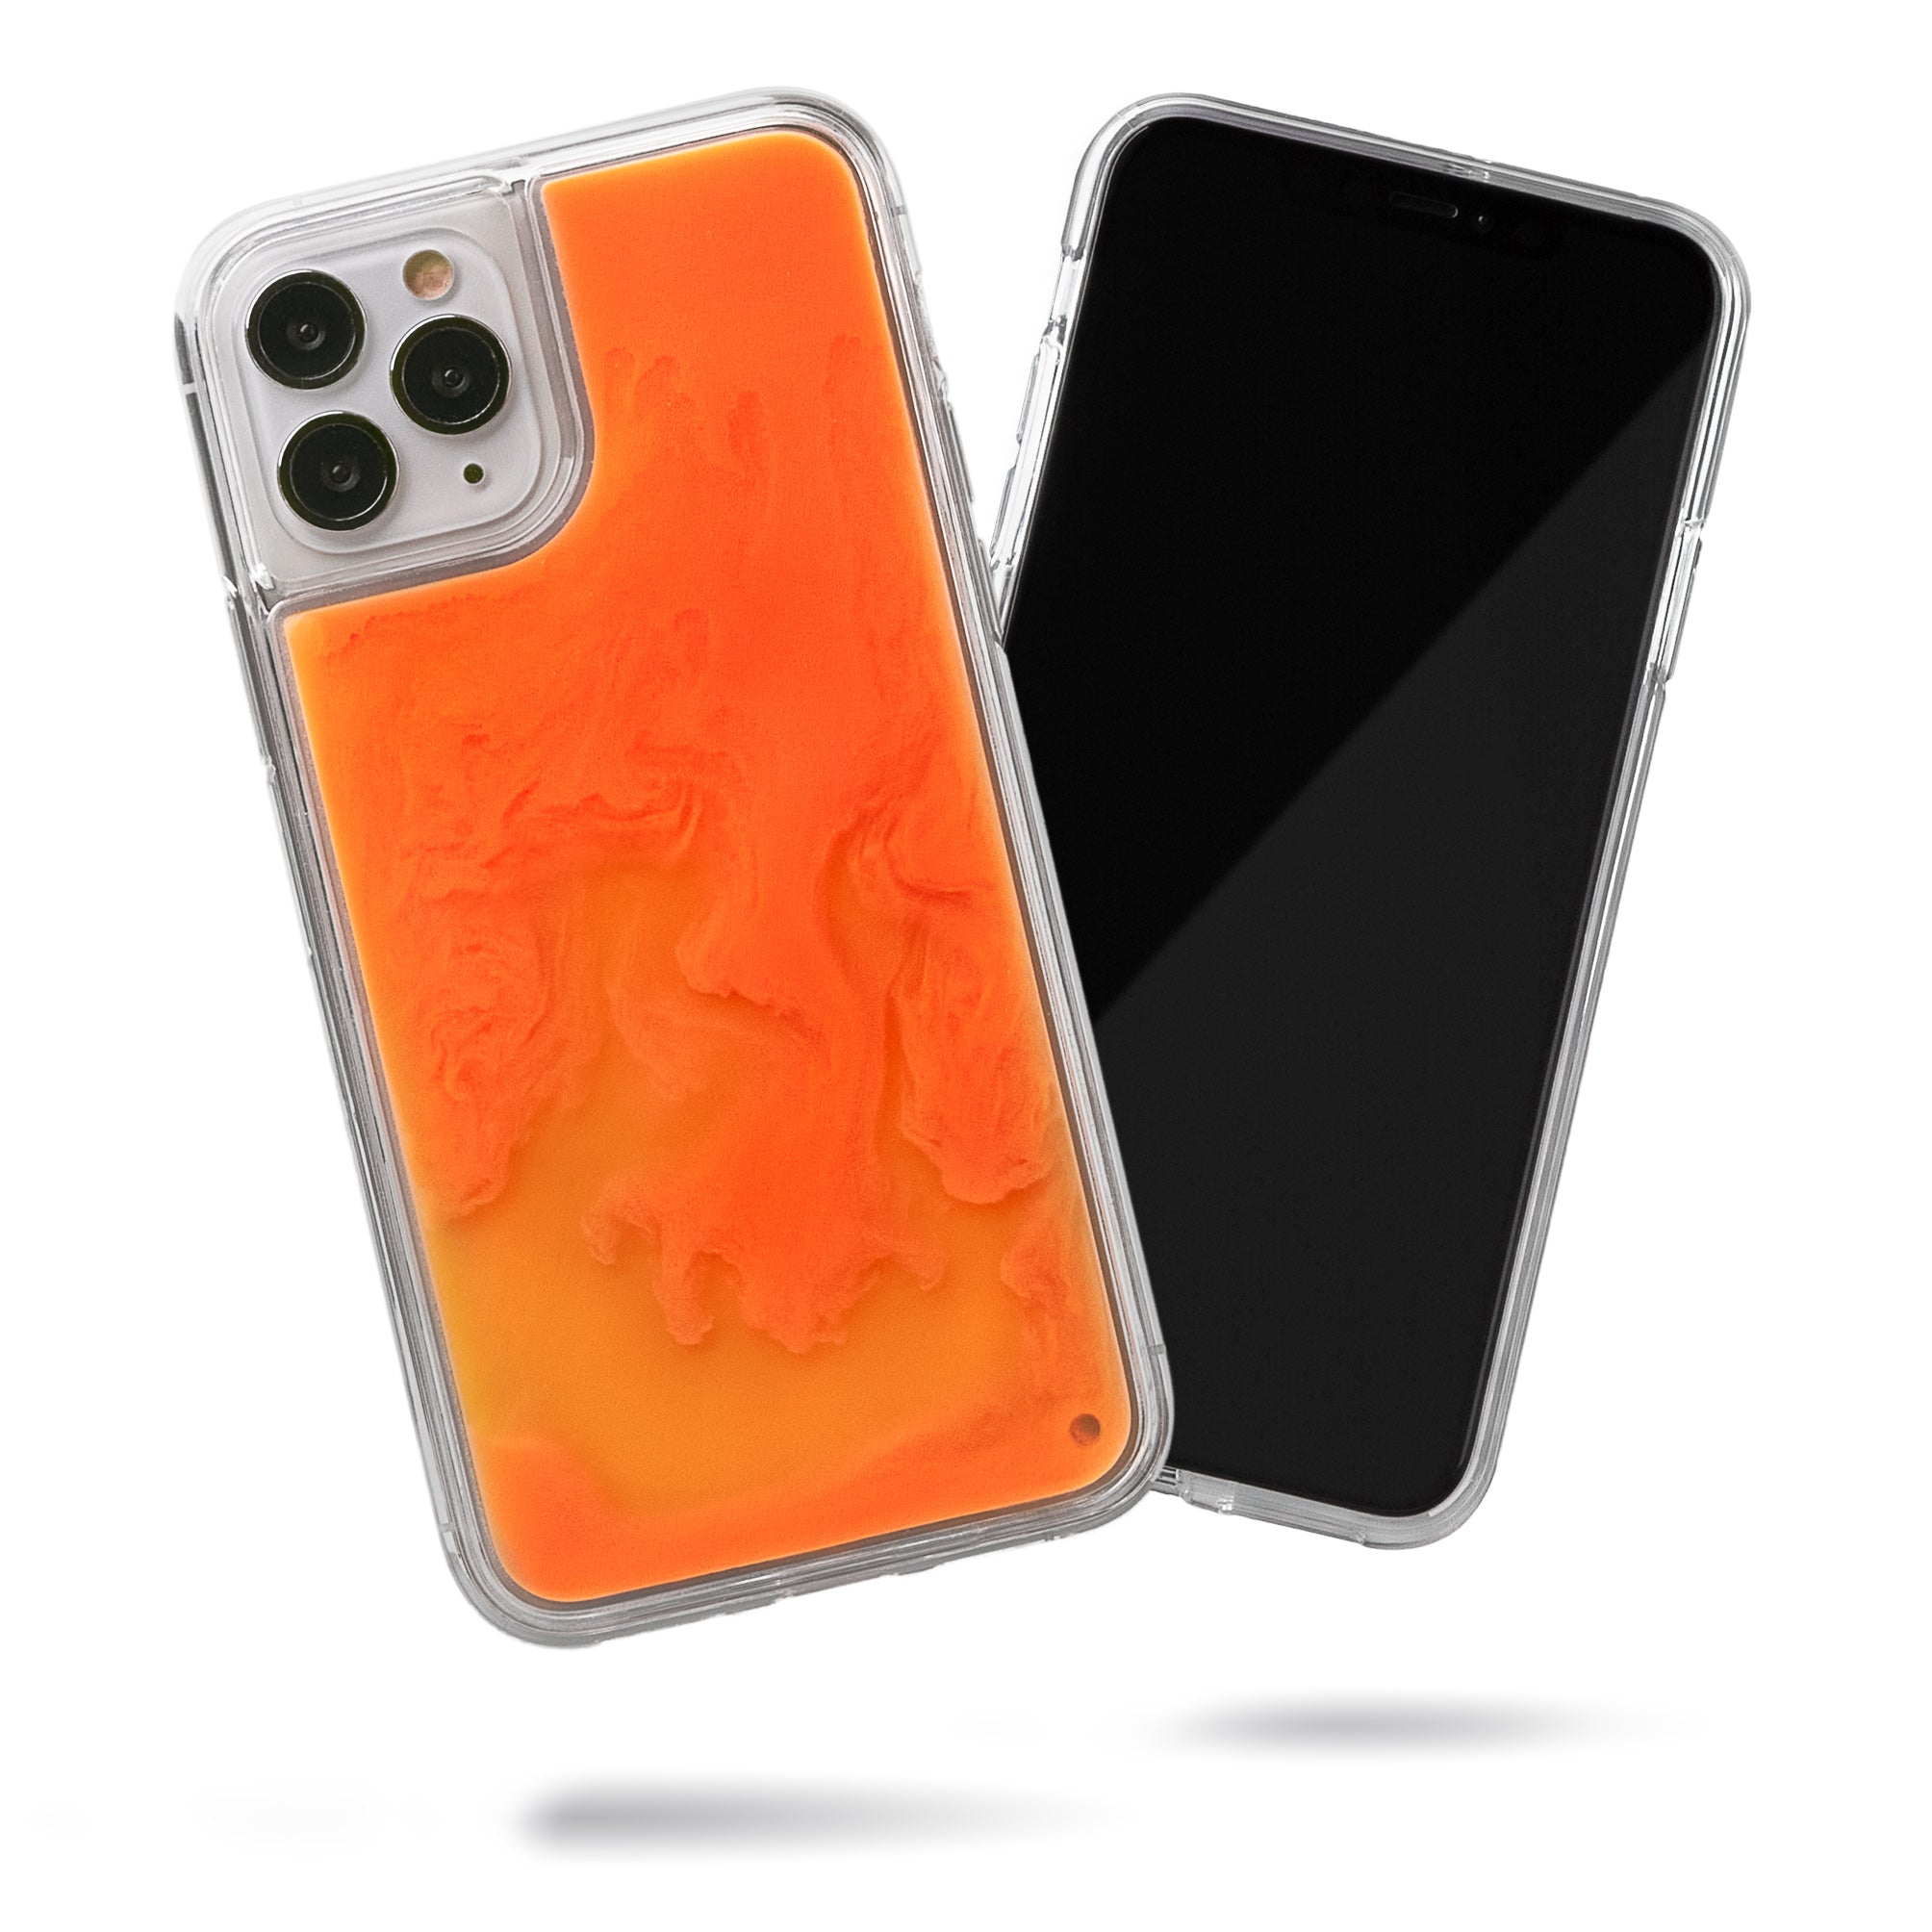 Neon Sand iPhone 11 Pro Case - Orange Soda